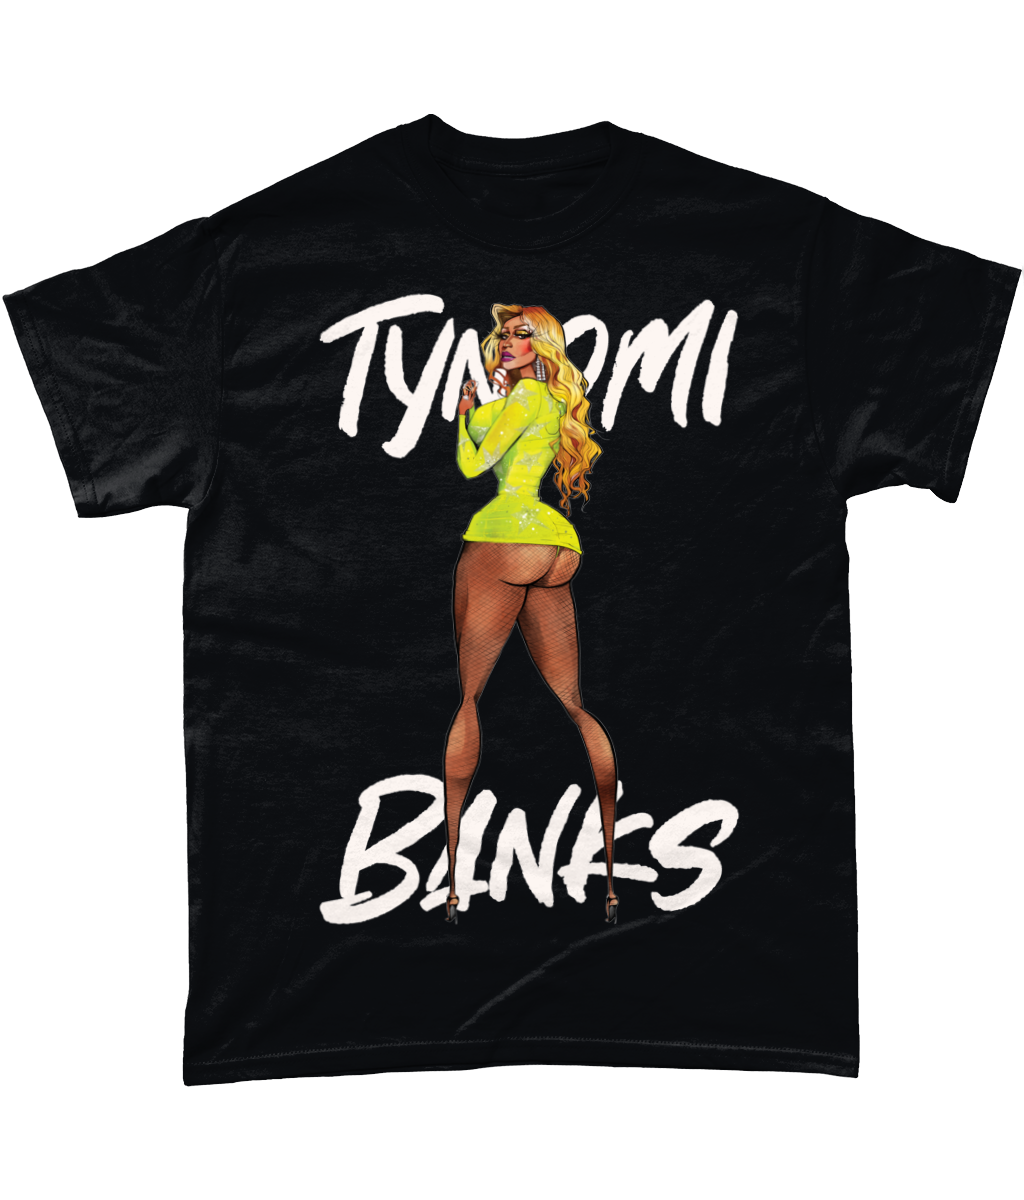 Tynomi Banks - Tshirt - SNATCHED MERCH